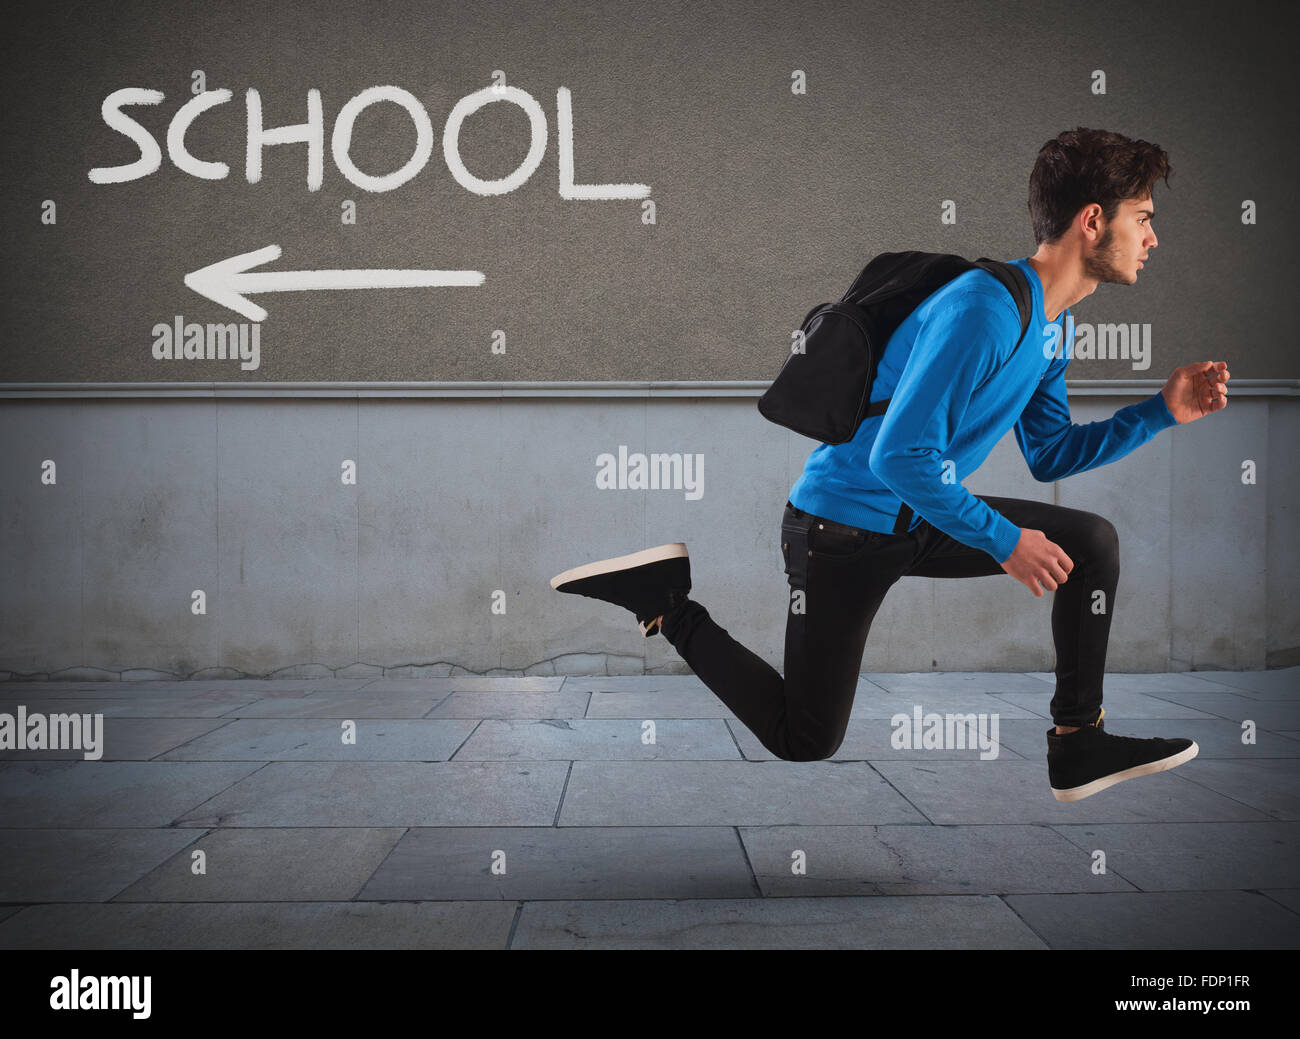 Run away from school Stock Photo